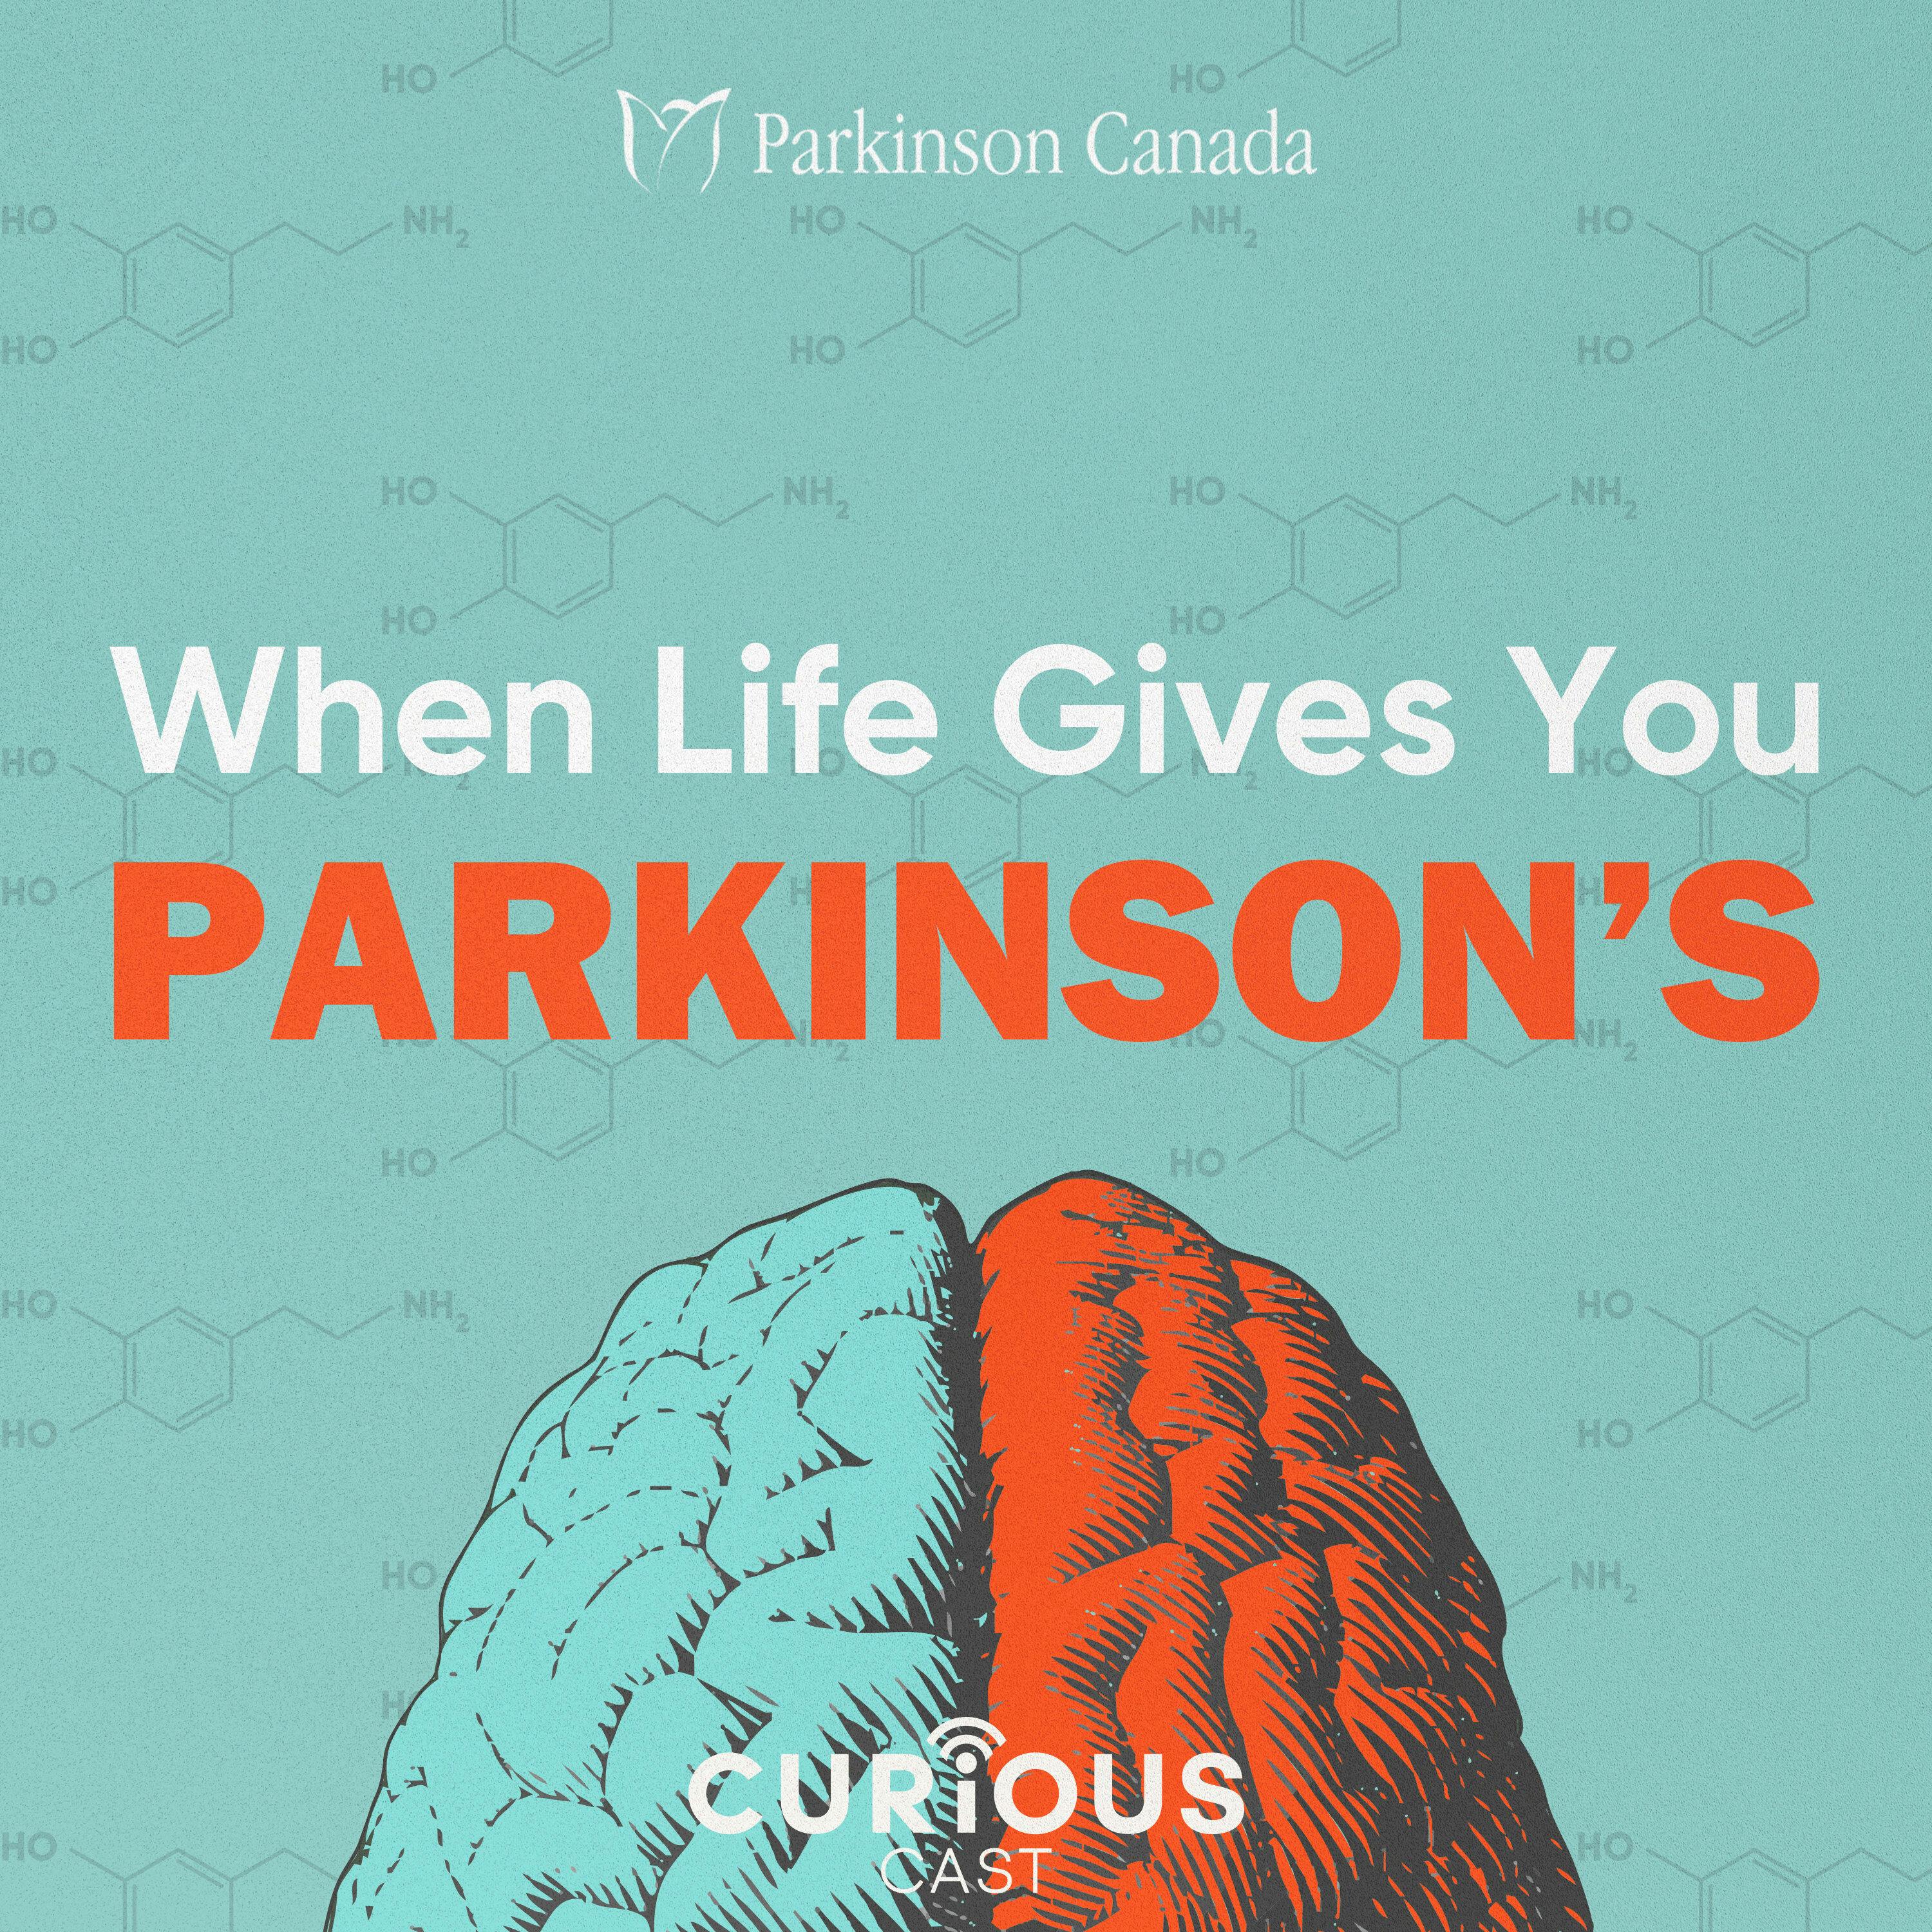 World Parkinson’s Day